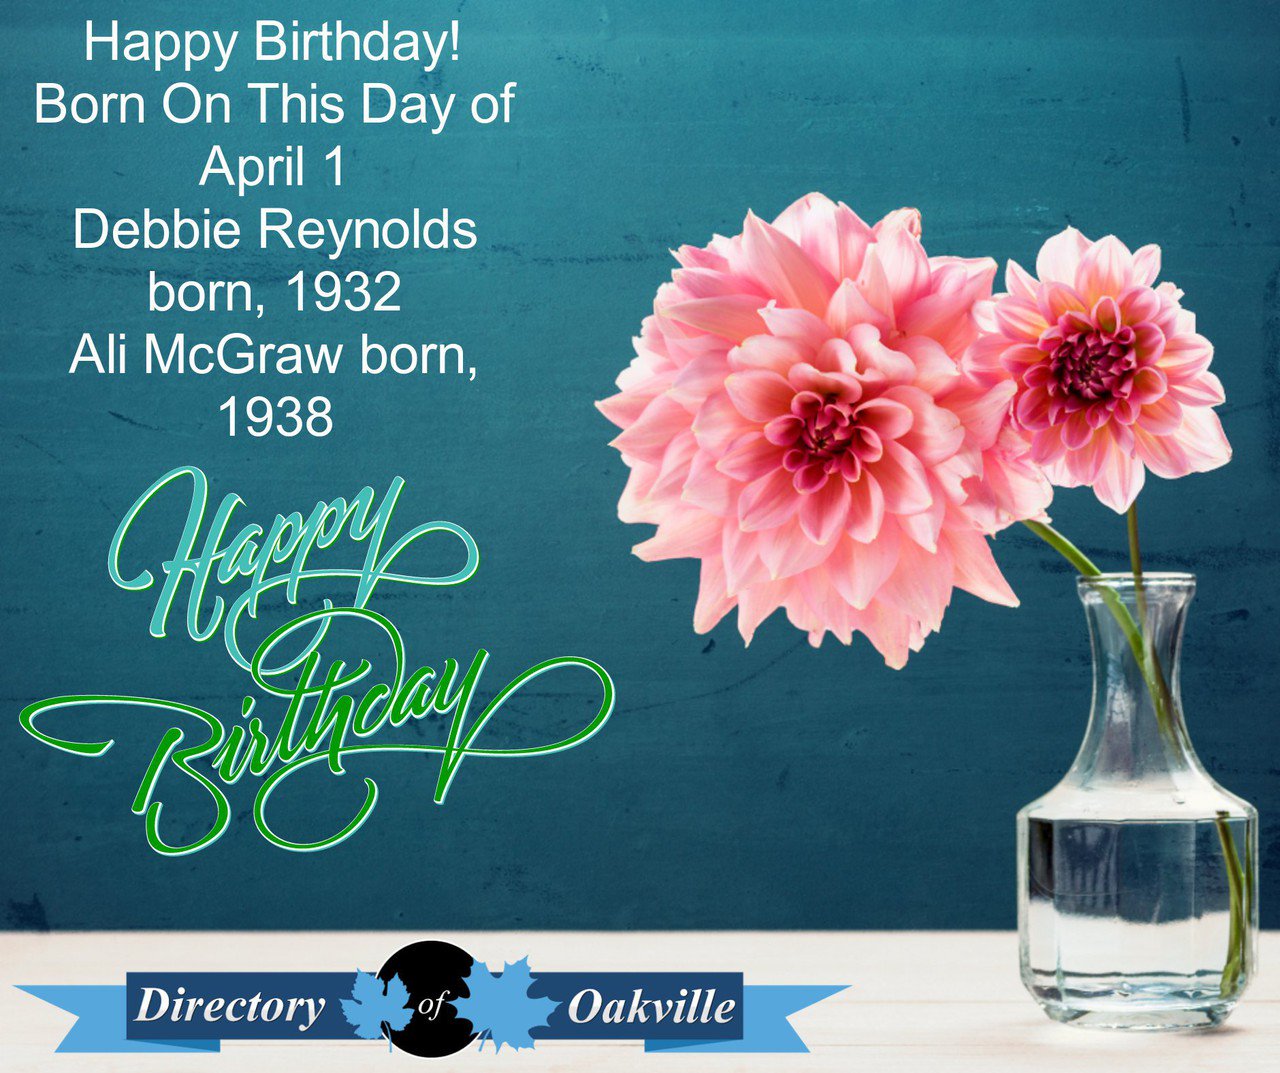 Happy Birthday! Born On This Day of April 1
Debbie Reynolds born, 1932
Ali McGraw born, 1938 